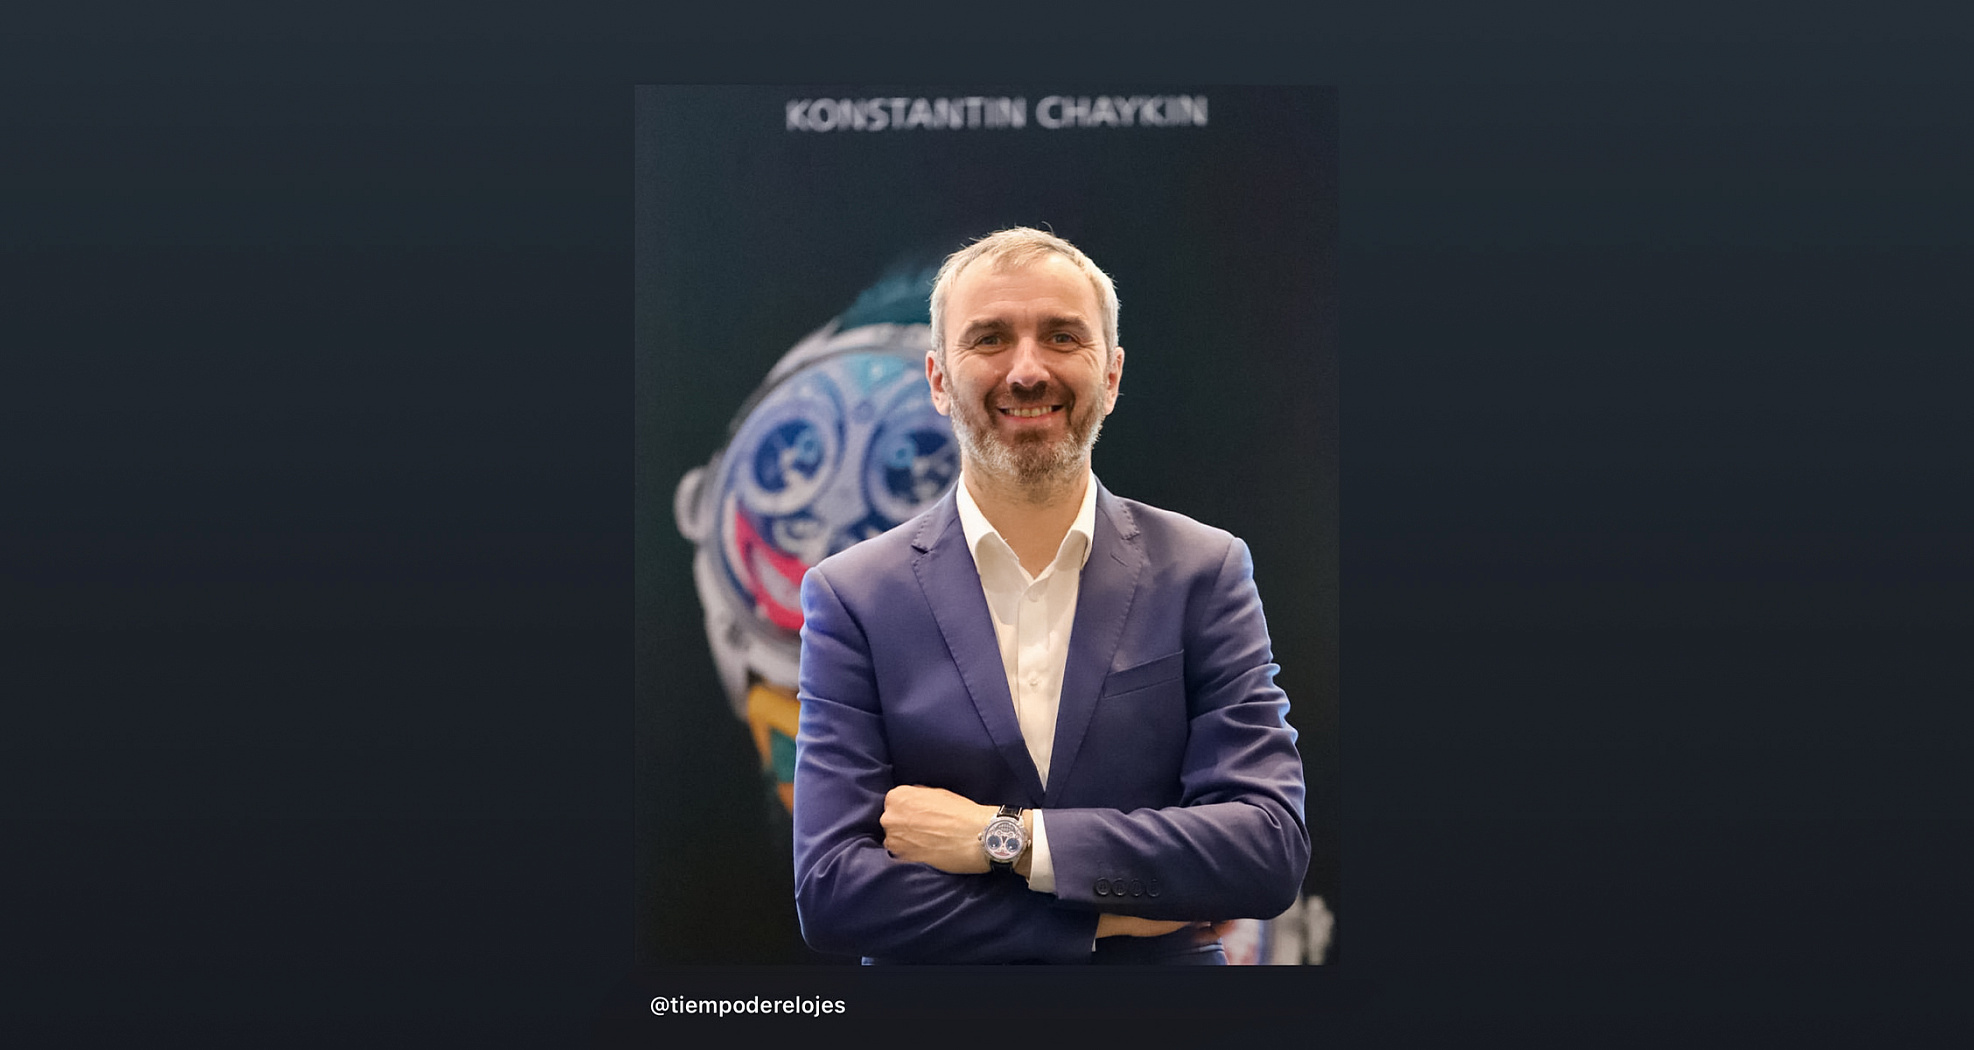 Konstantin Chaykin at SIAR 2022